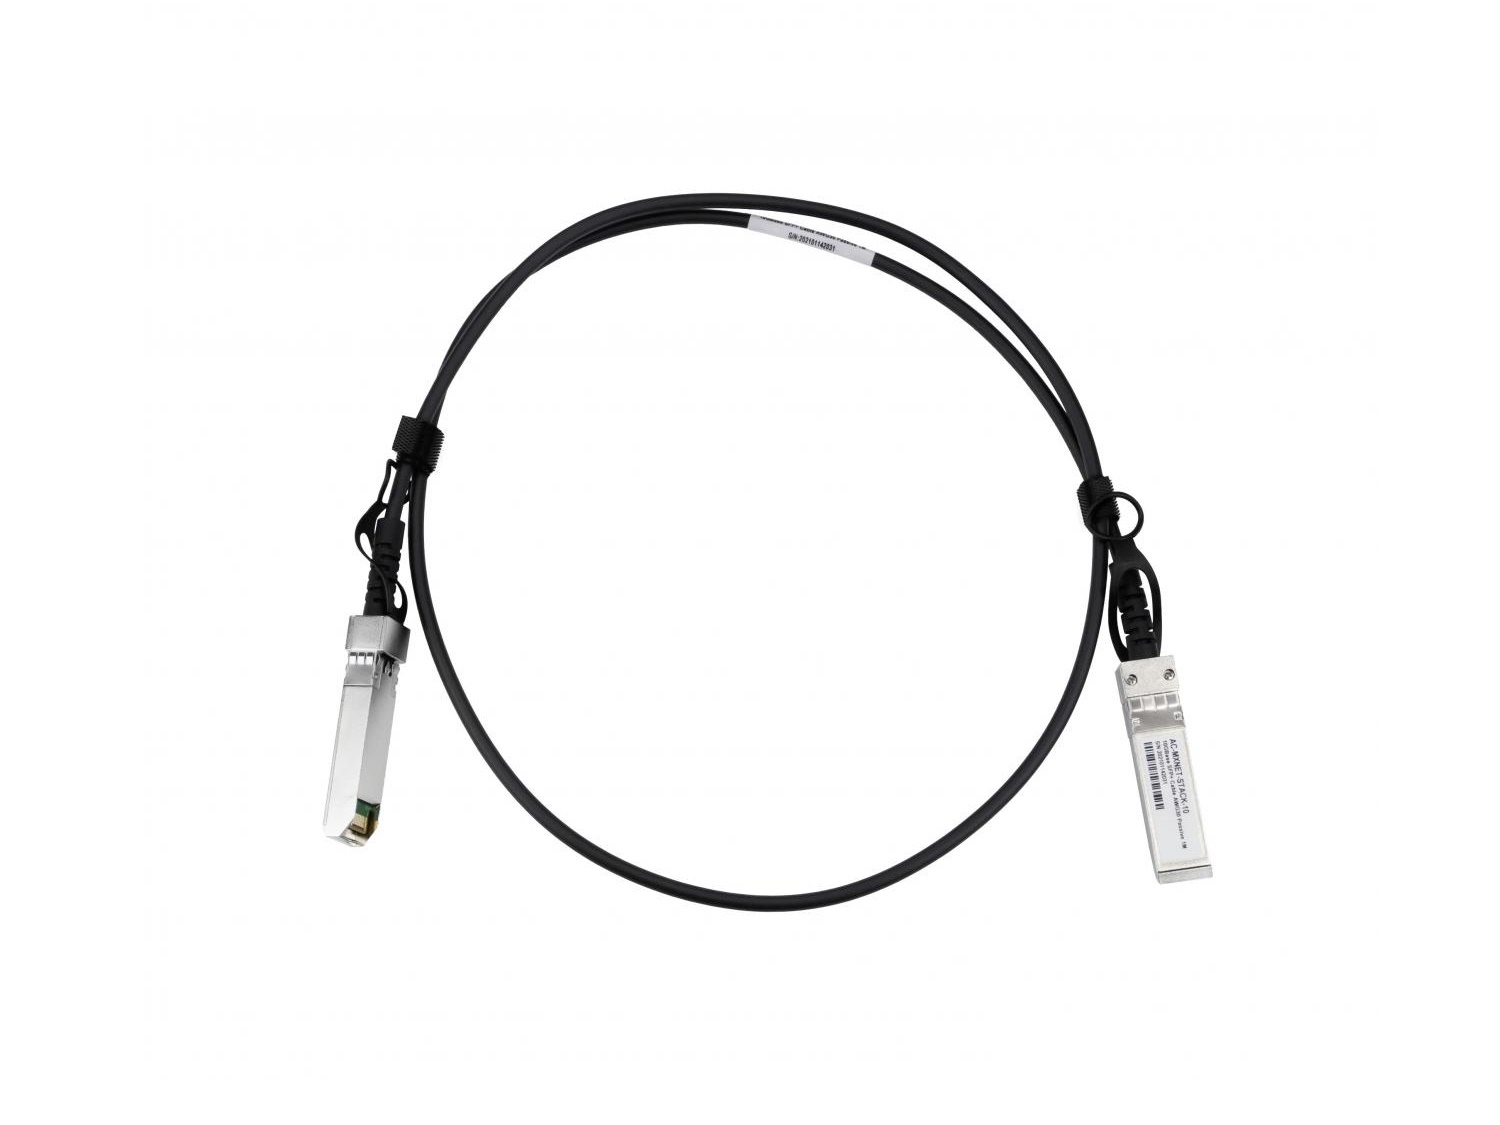 AC-MXNET-STACK10 1m Fiber Optic Link Cable by AVPro Edge